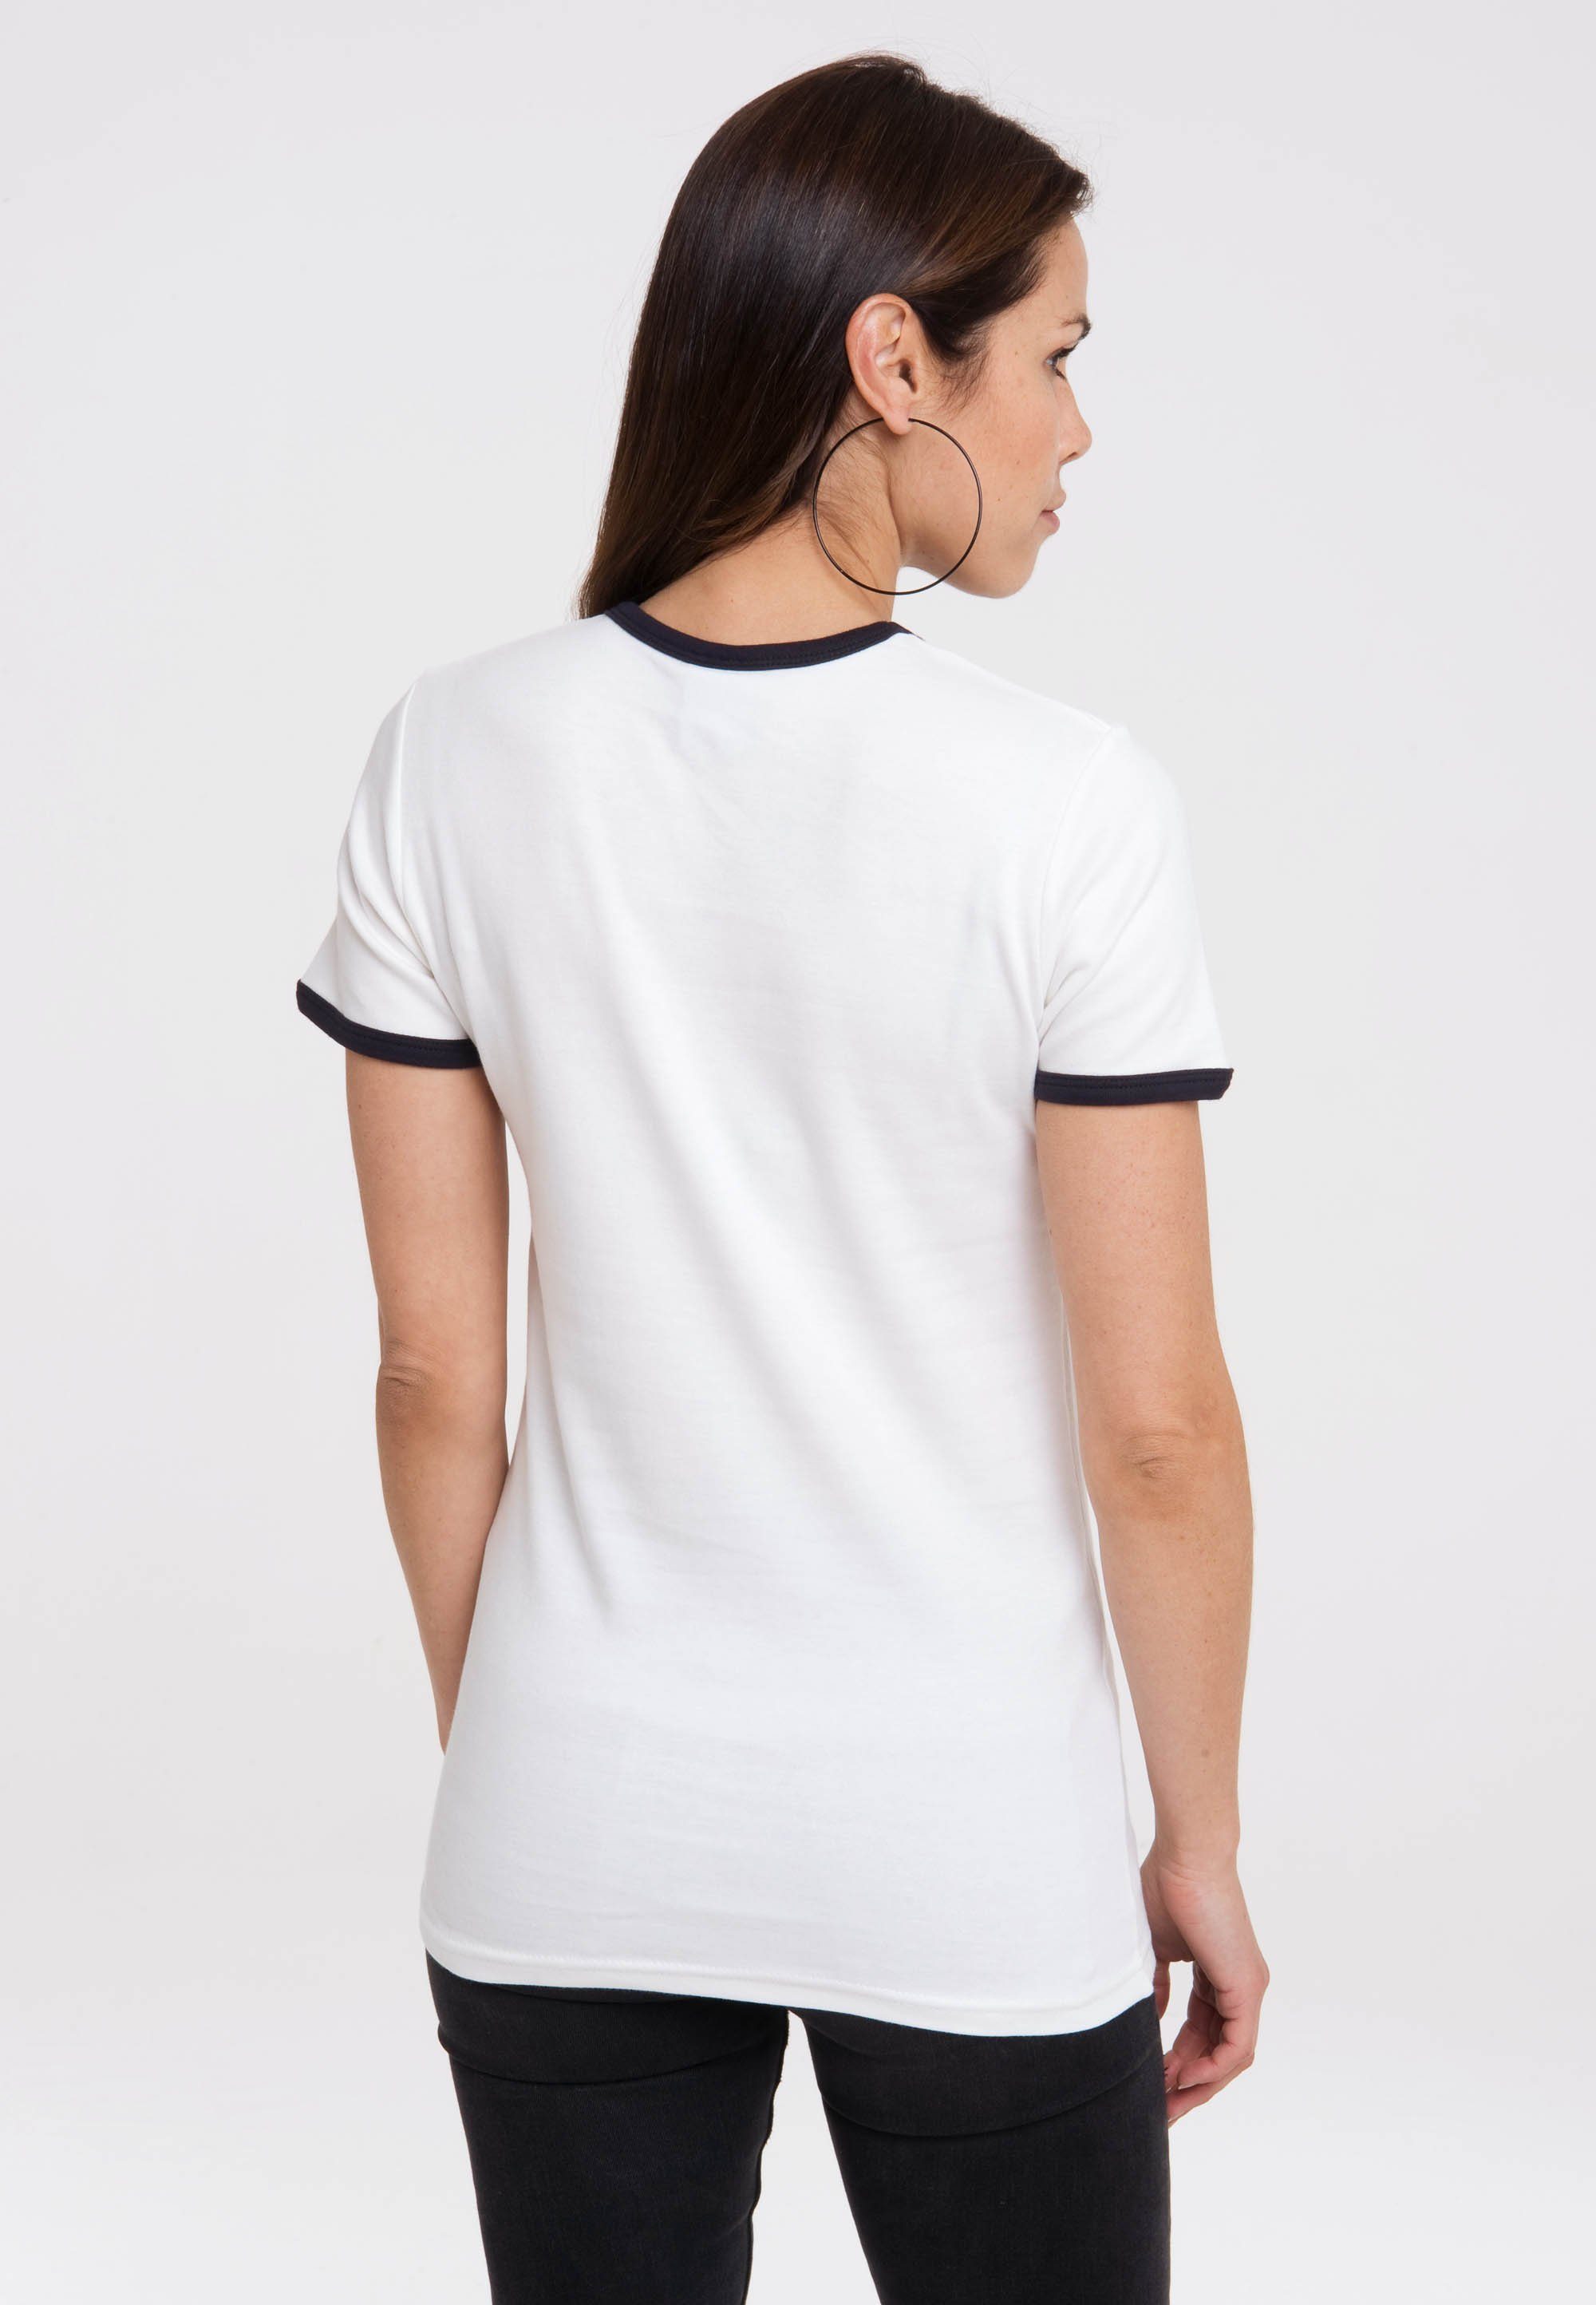 LOGOSHIRT T-Shirt Sesamstrasse - lizenziertem Krümelmonster dunkelblau mit Print weiß